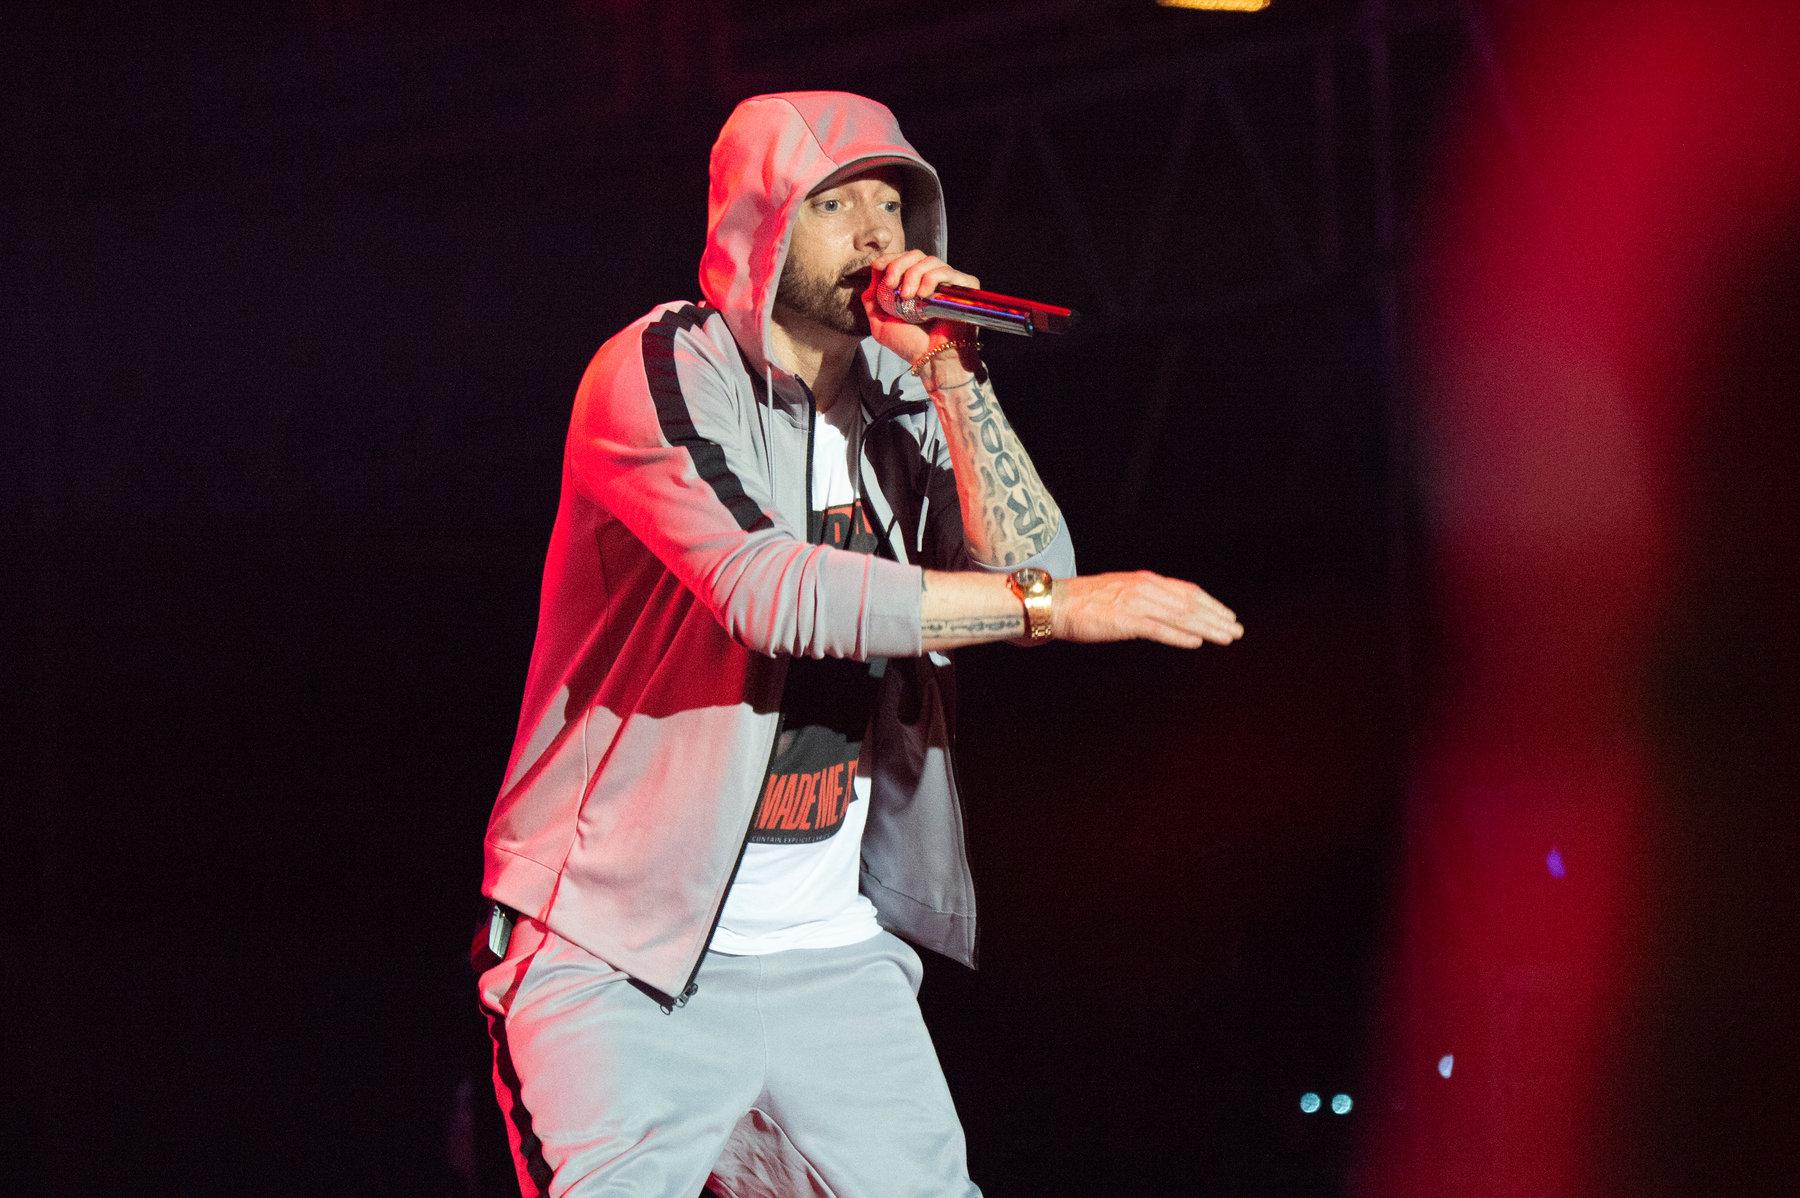 Eminem Faces Backlash Over Lyrics About Deadly Attack at